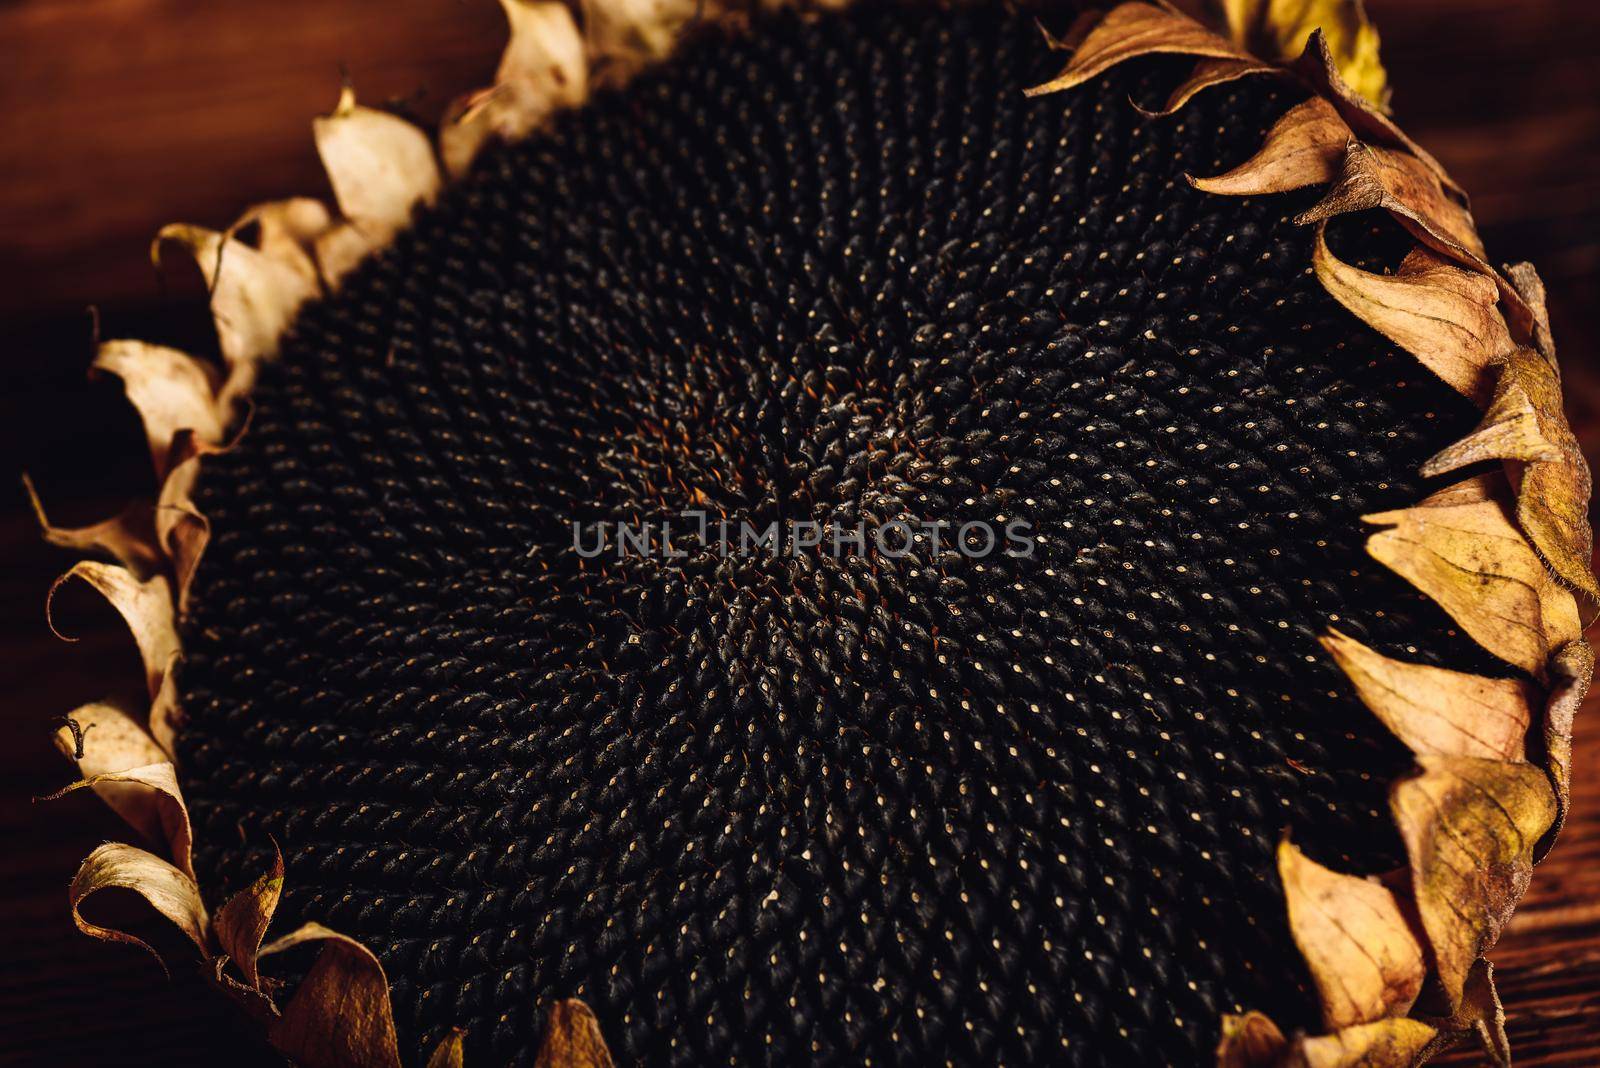 Dried sunflower head by Seva_blsv